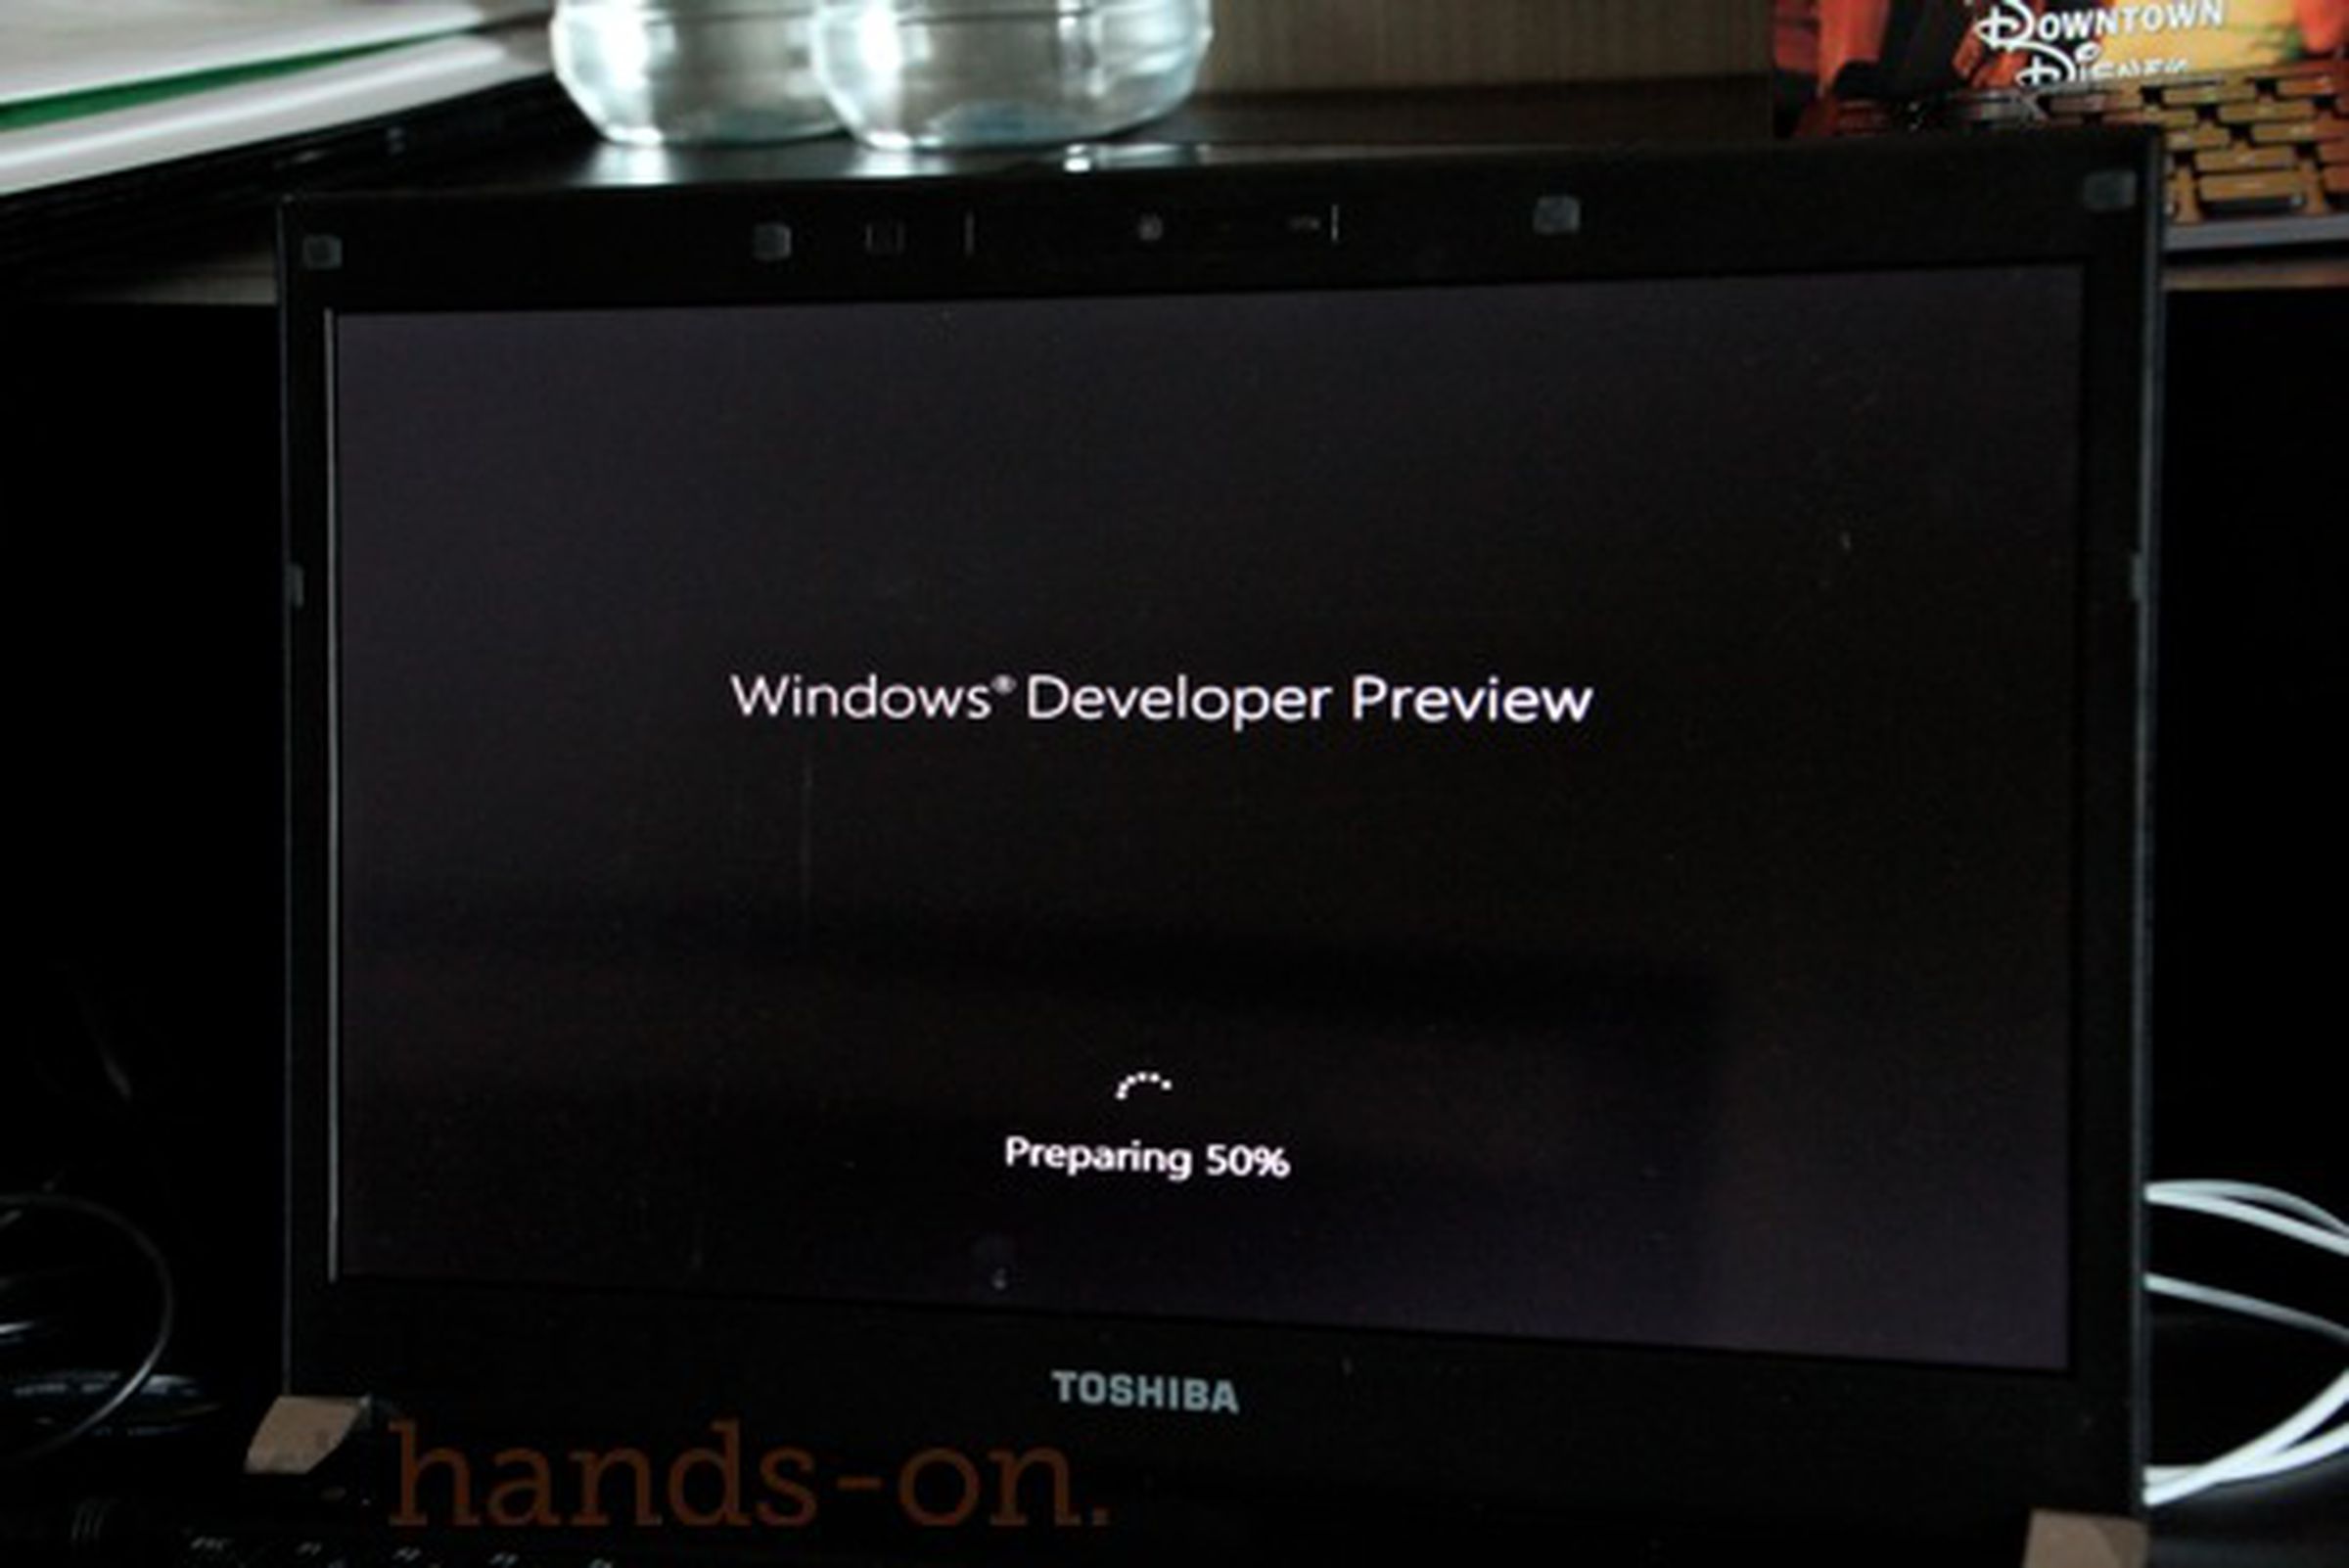 Windows 8 on a laptop hands-on photos